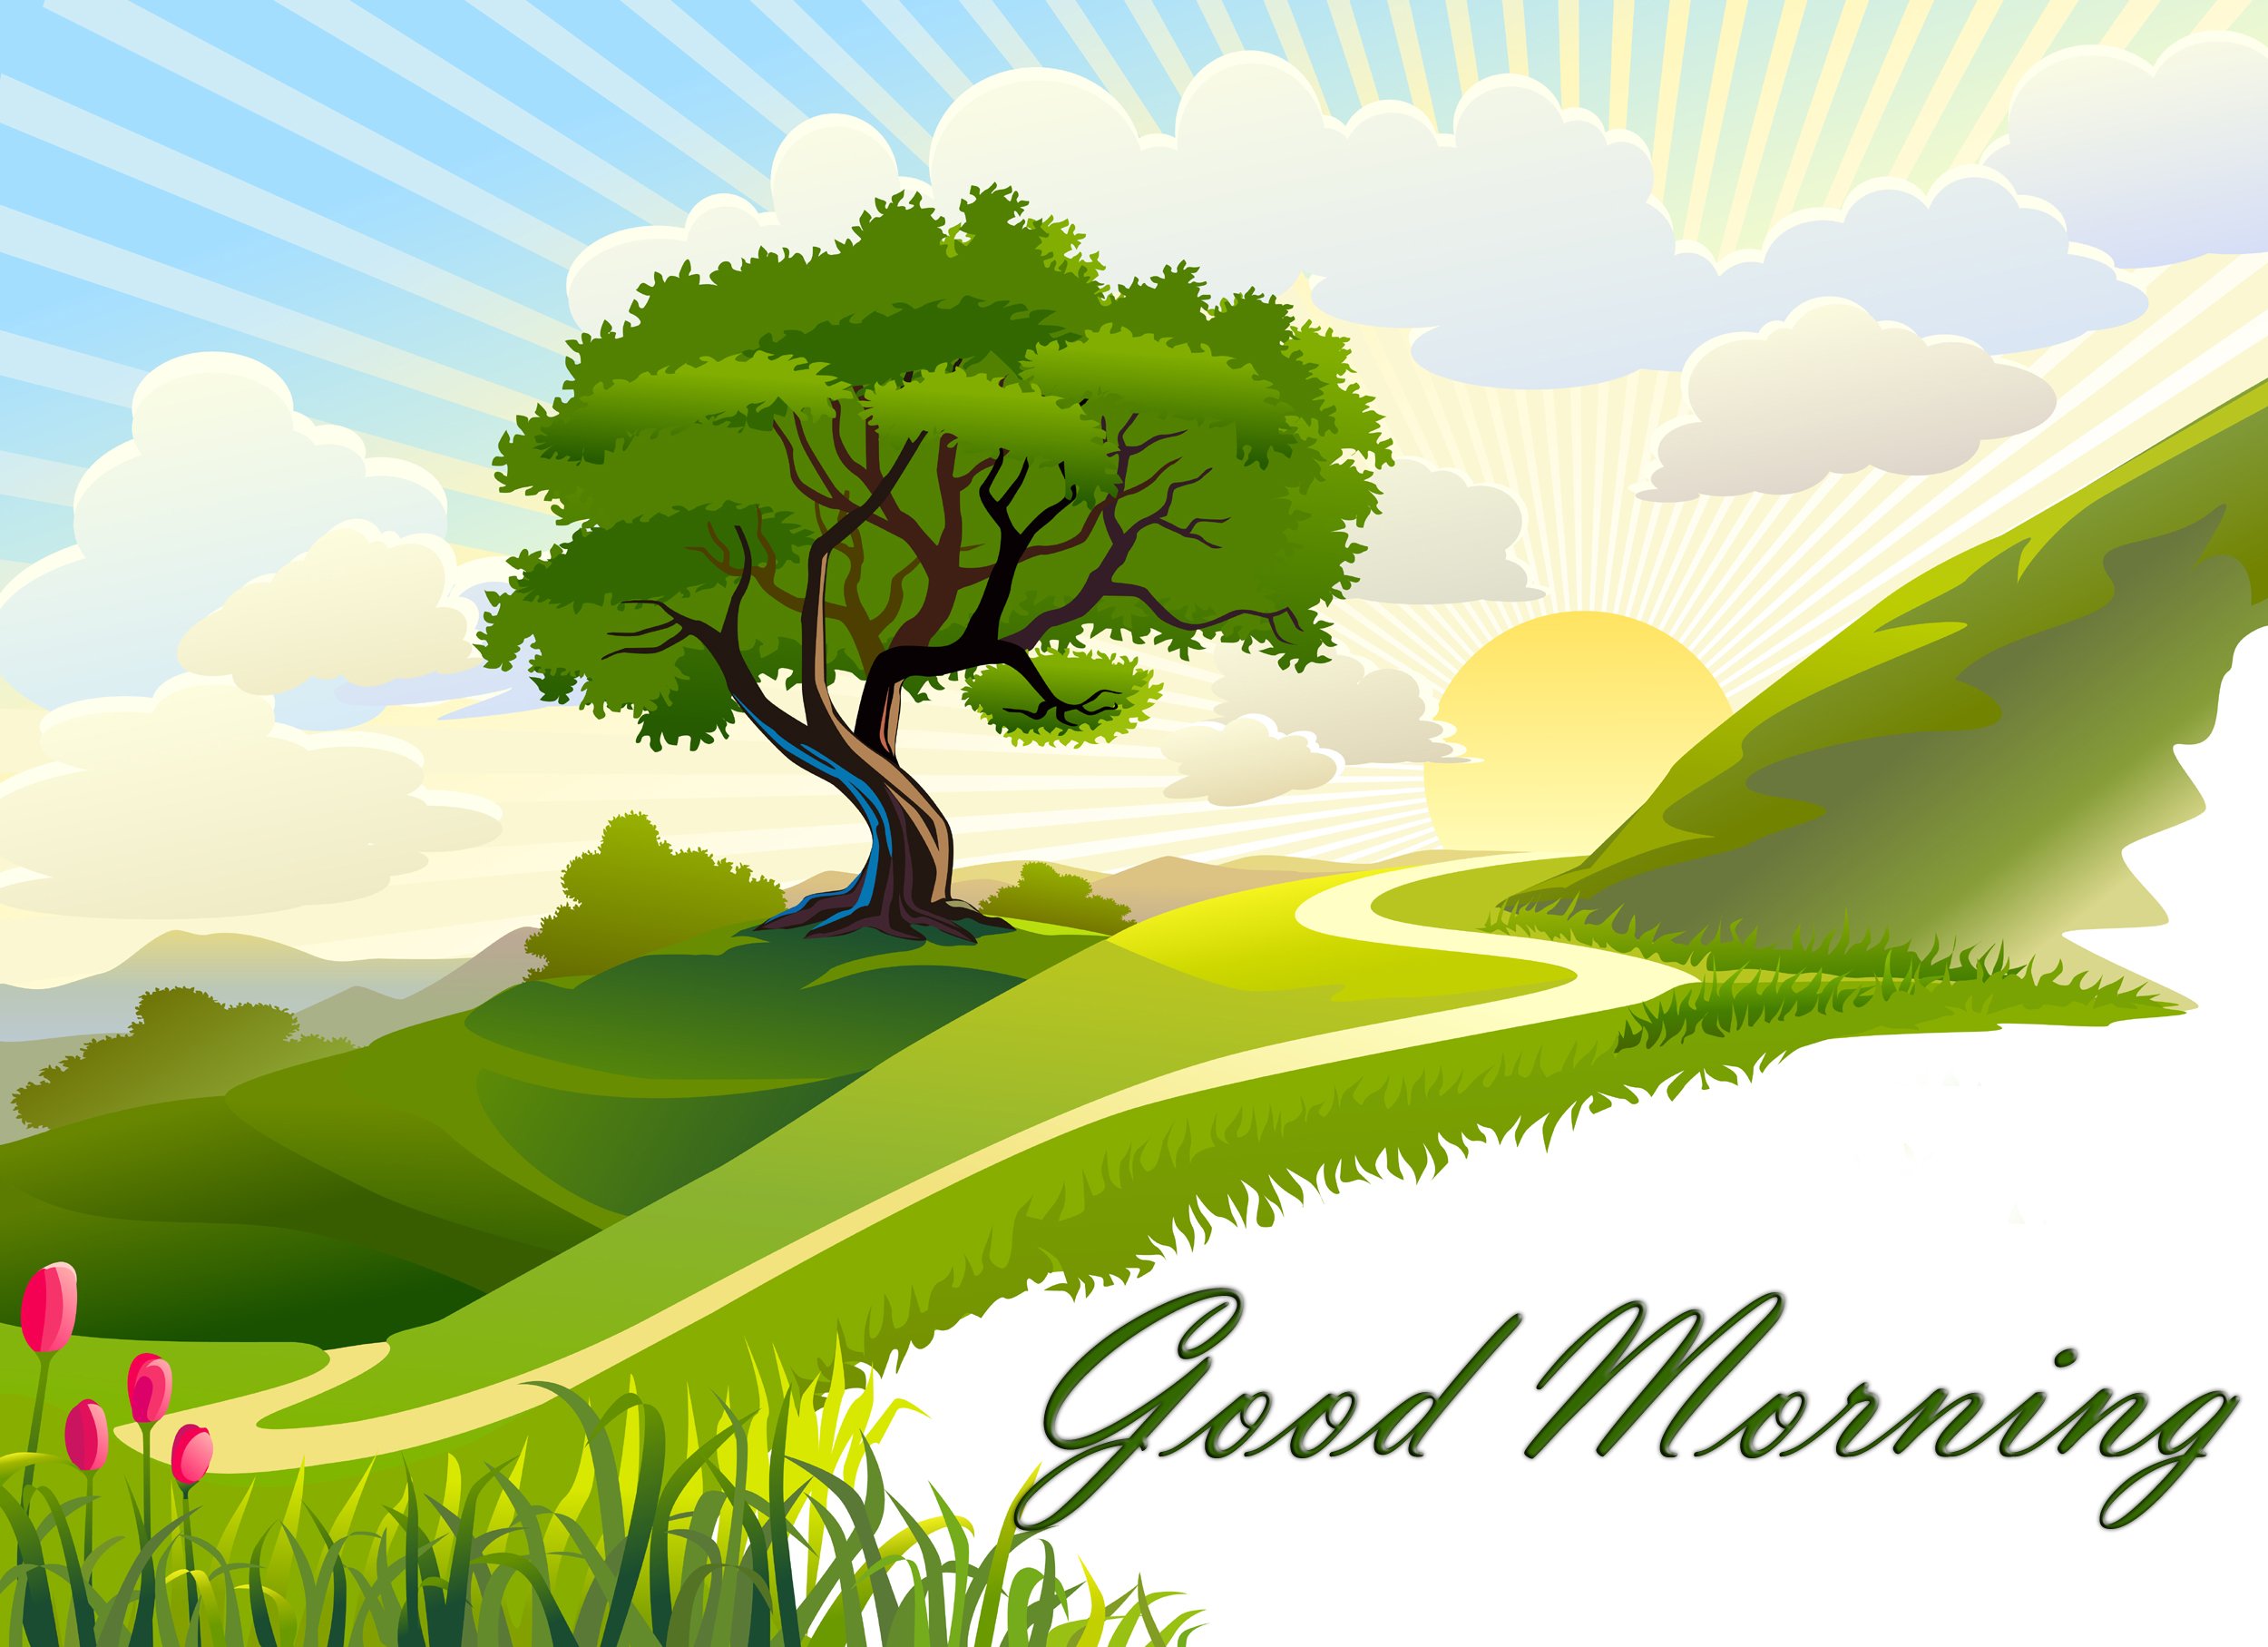 good, Morning, Greetings, Motivational, Mood Wallpaper